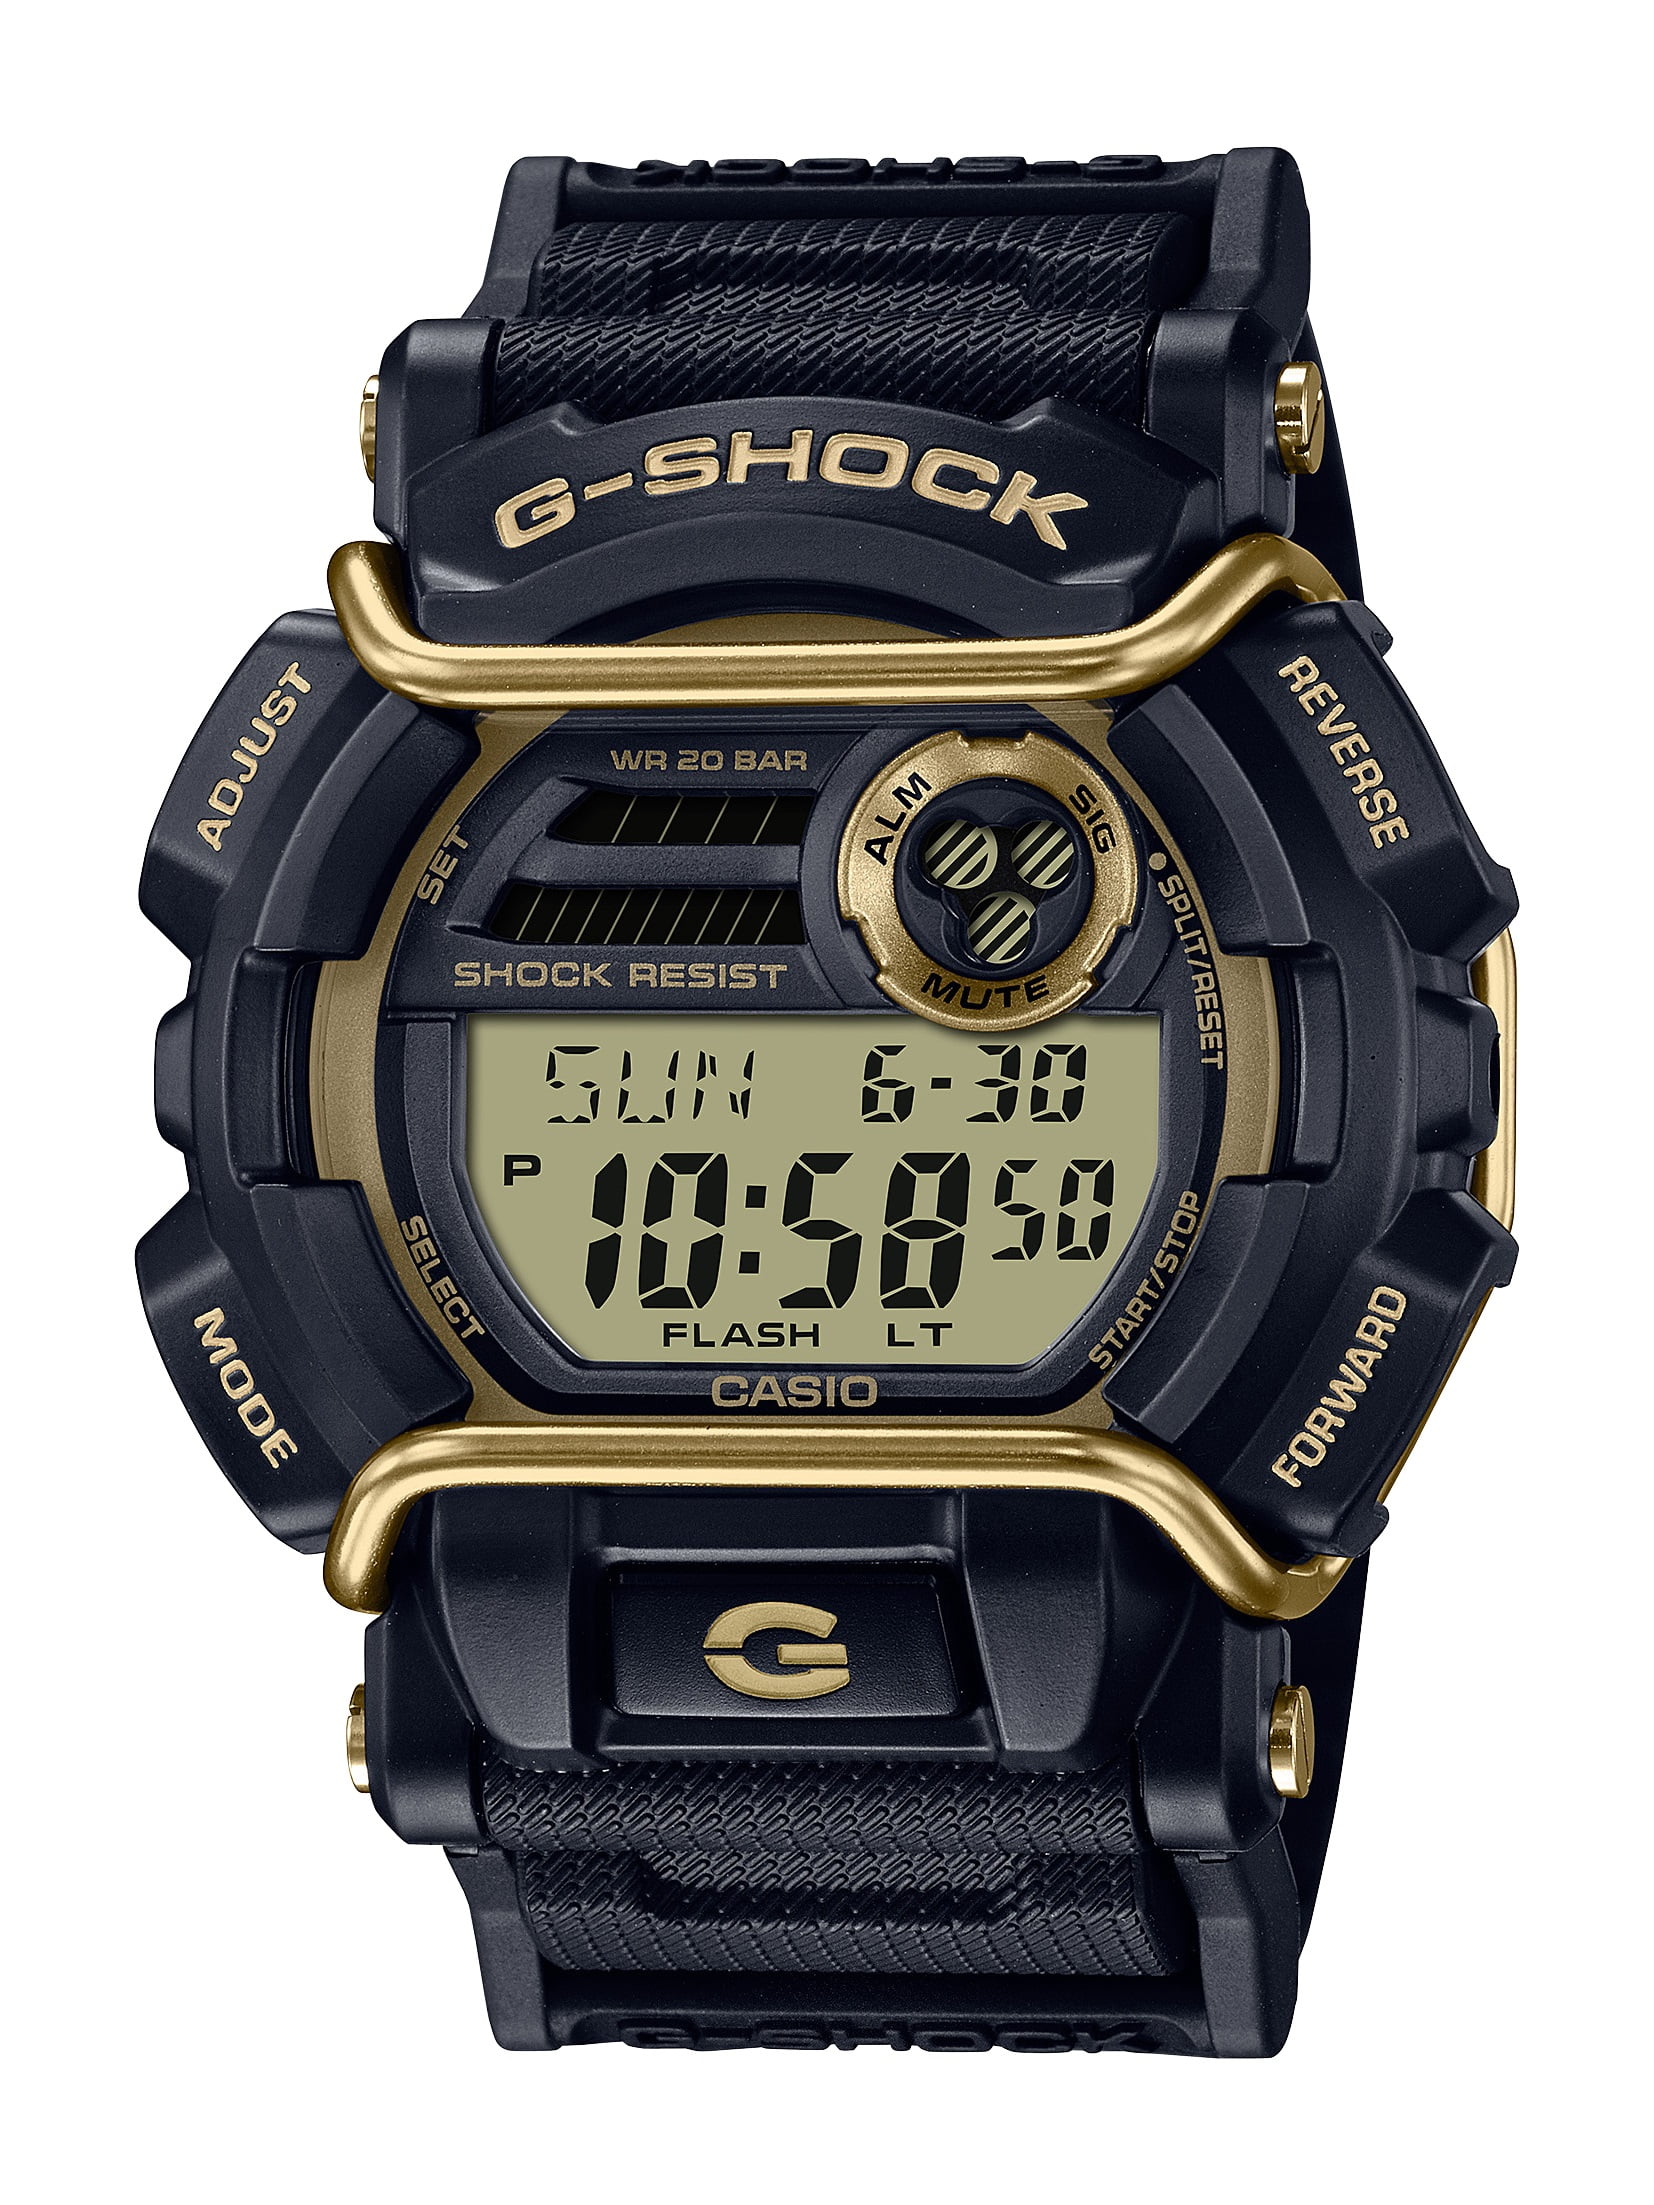 Casio Men's G-Shock Black And Gold Digital Sport Watch GD-400GB-1B2CR ...